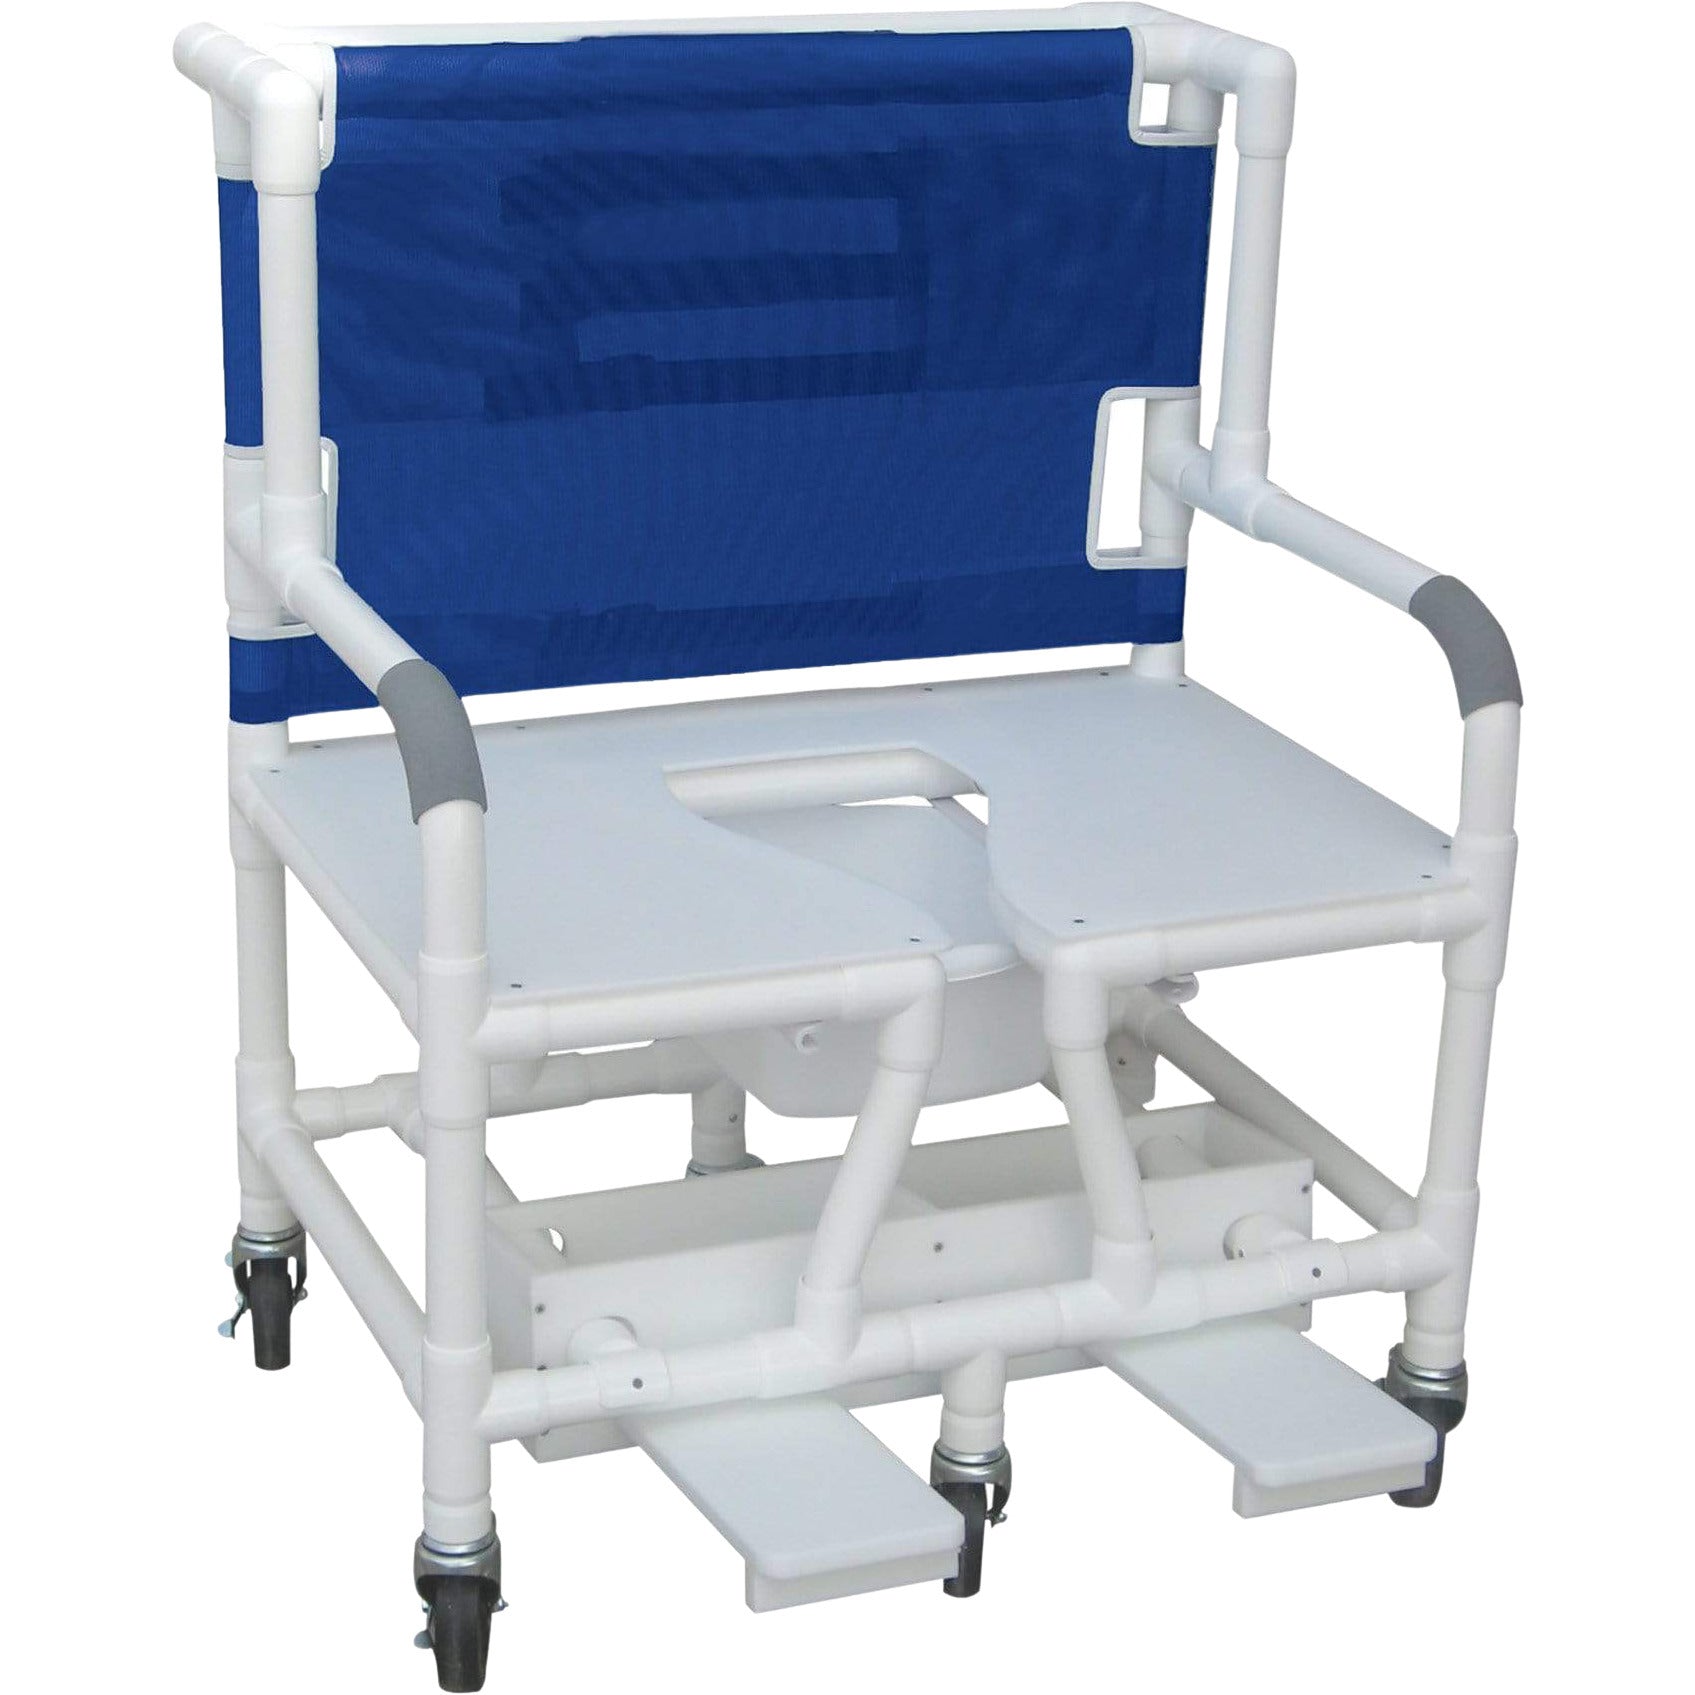 ConvaQuip Shower Chairs - PVC Model 131-5 Bariatric Shower Chair